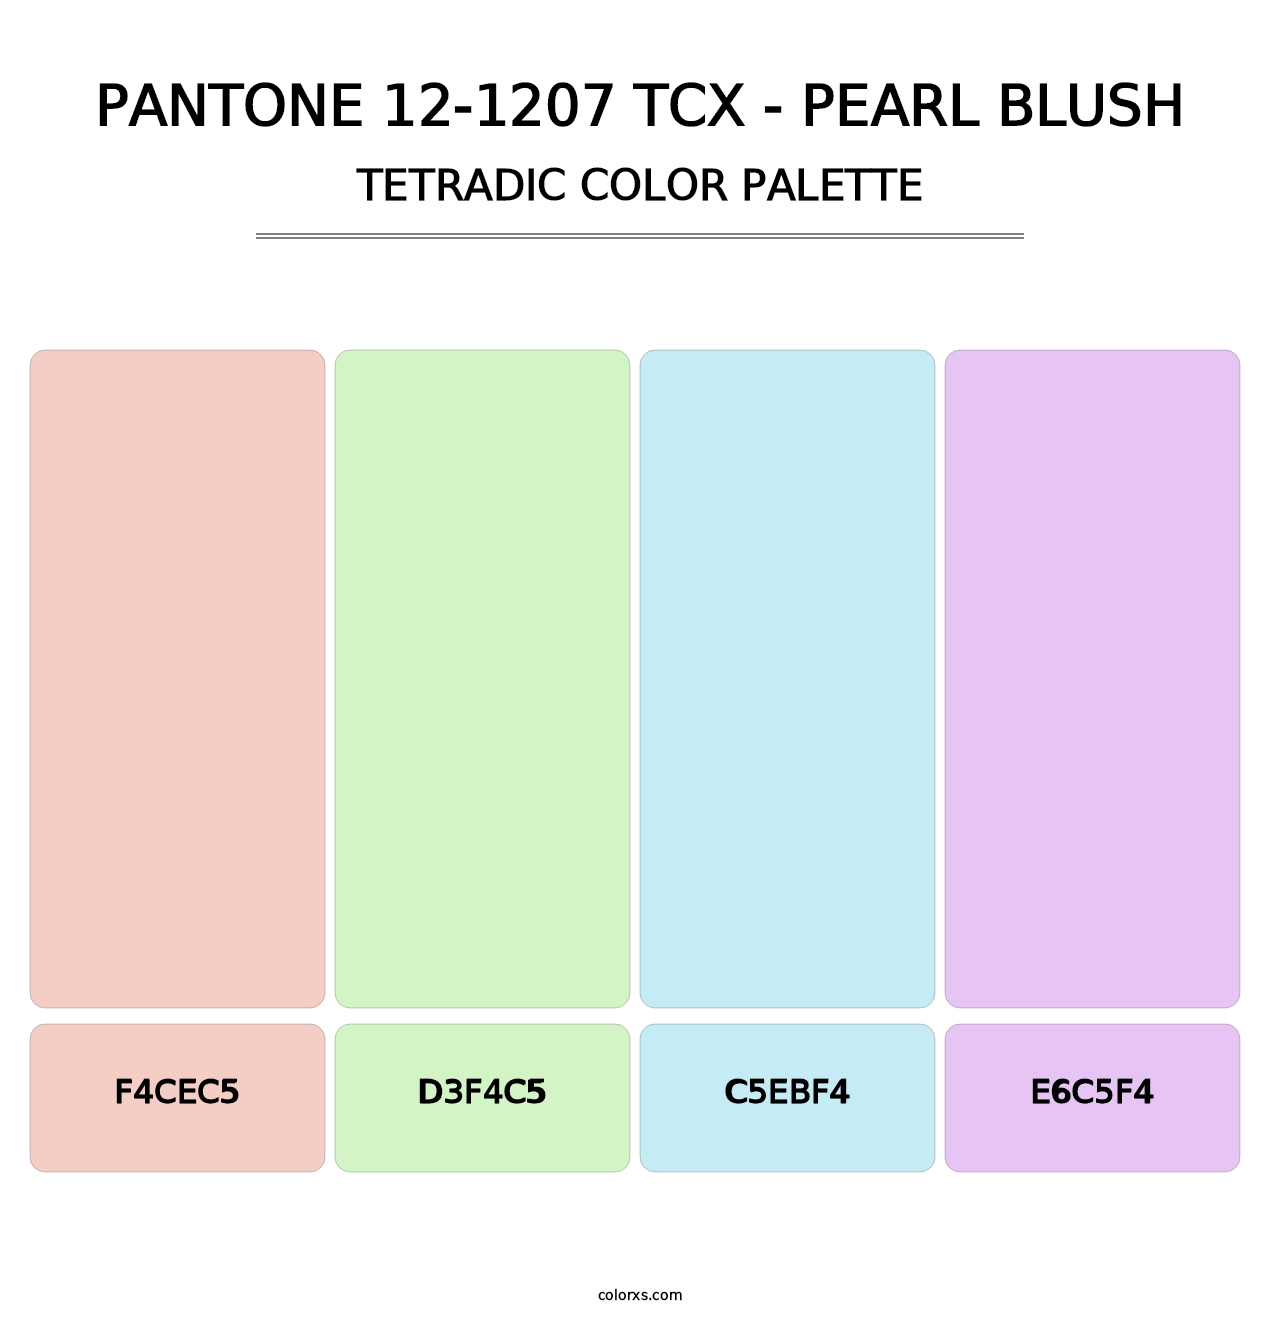 PANTONE 12-1207 TCX - Pearl Blush - Tetradic Color Palette